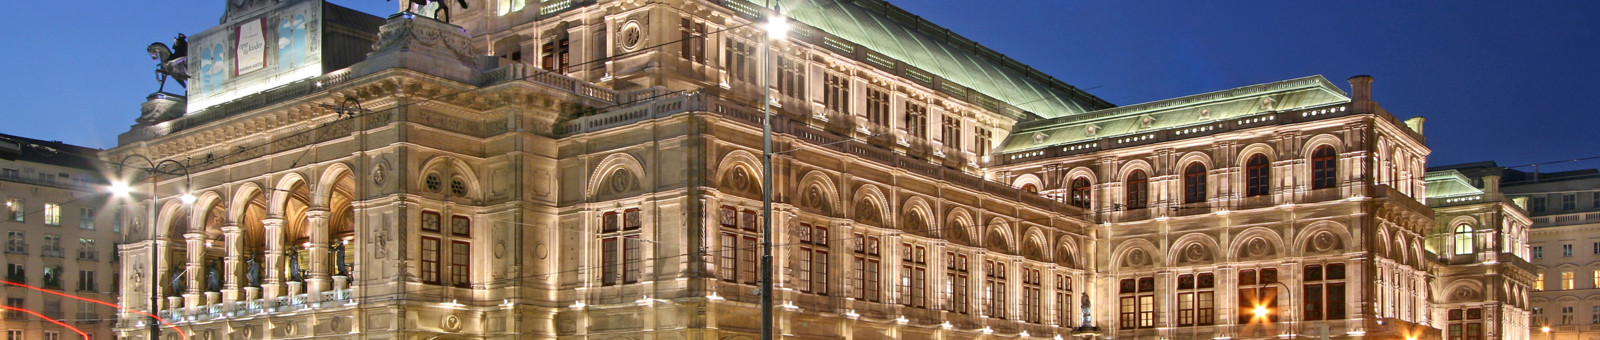     The magnificent Vienna State Opera 